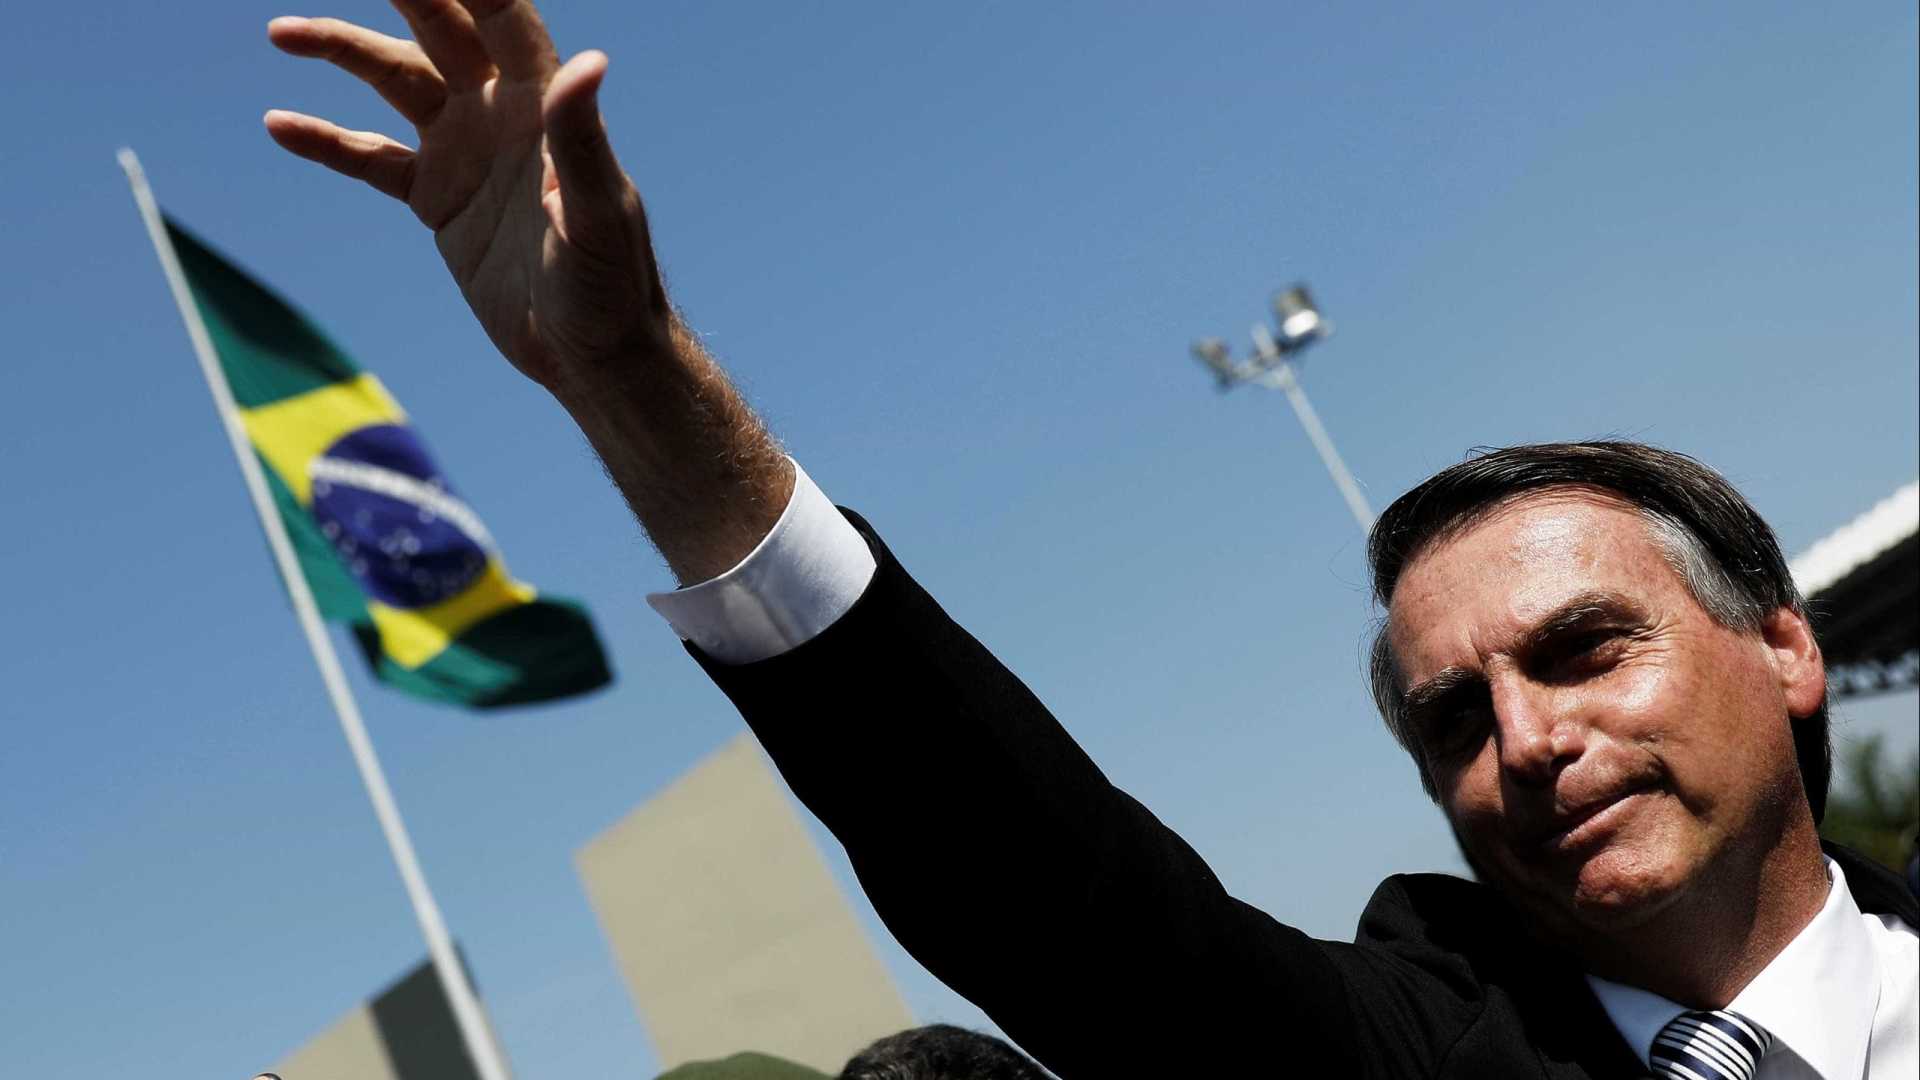 Avanço de Bolsonaro e Ciro assusta mercado